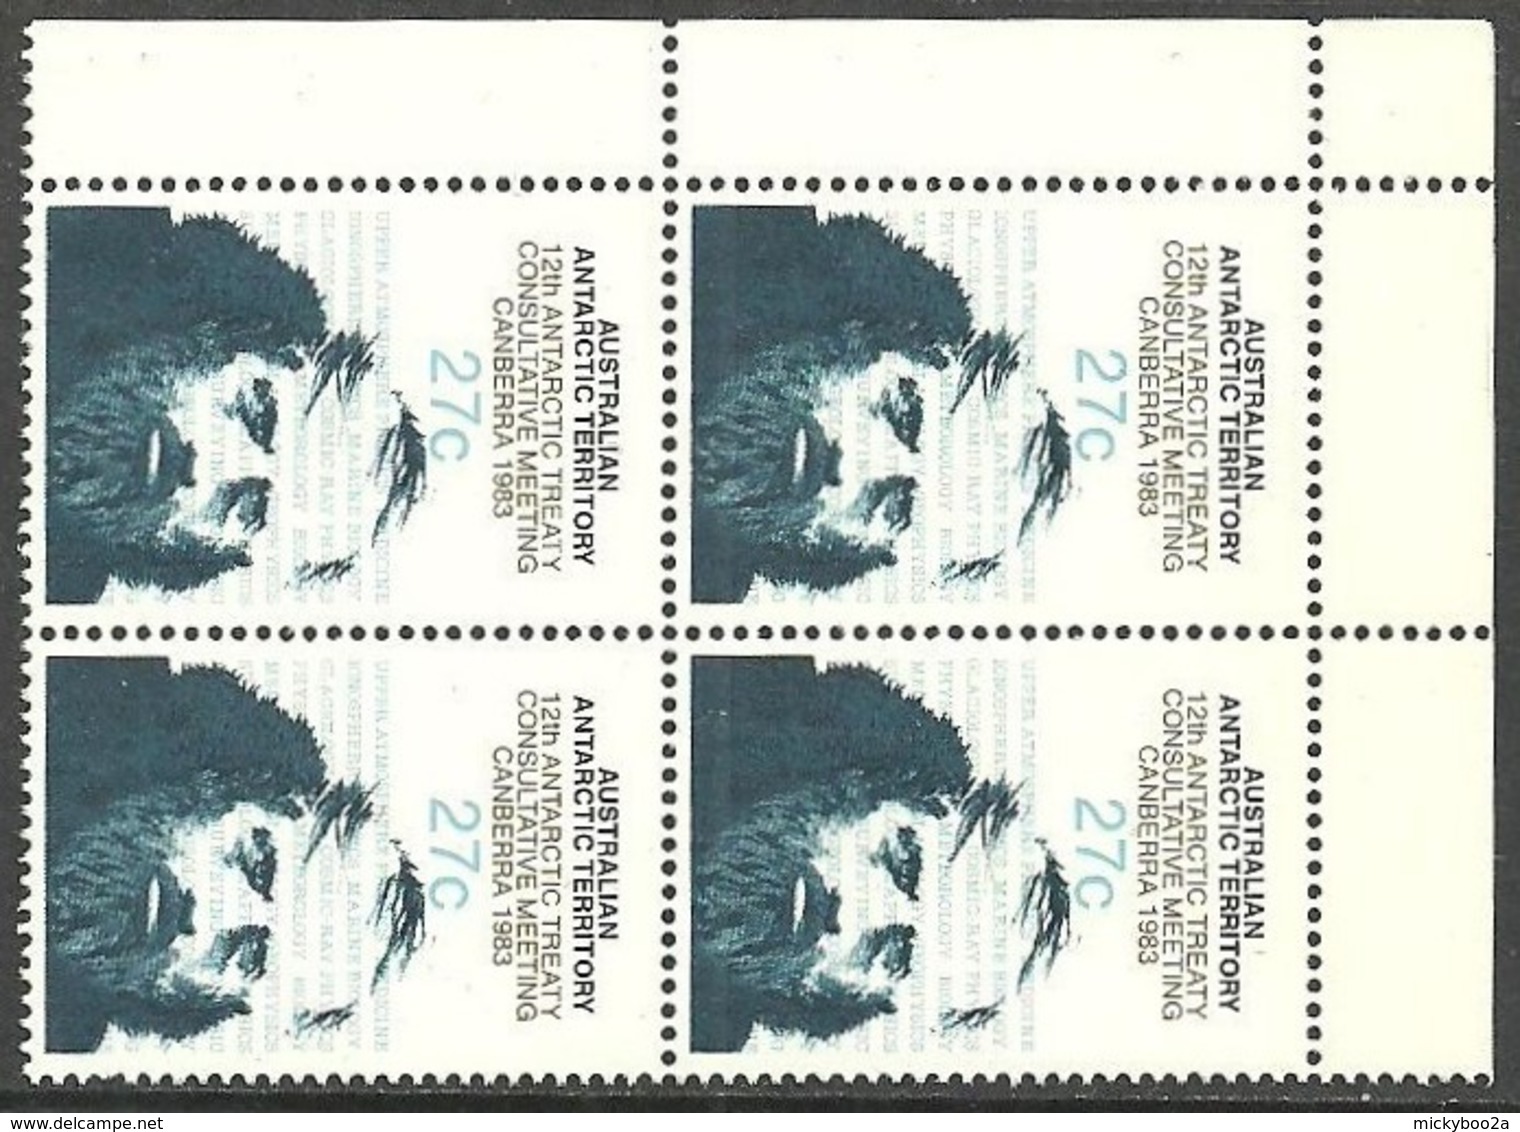 AUSTRALIA AAT ANTARCTIC TERRITORY 1983 TREATY SCIENTIST BLOCK OF 4 SET MNH - Unused Stamps